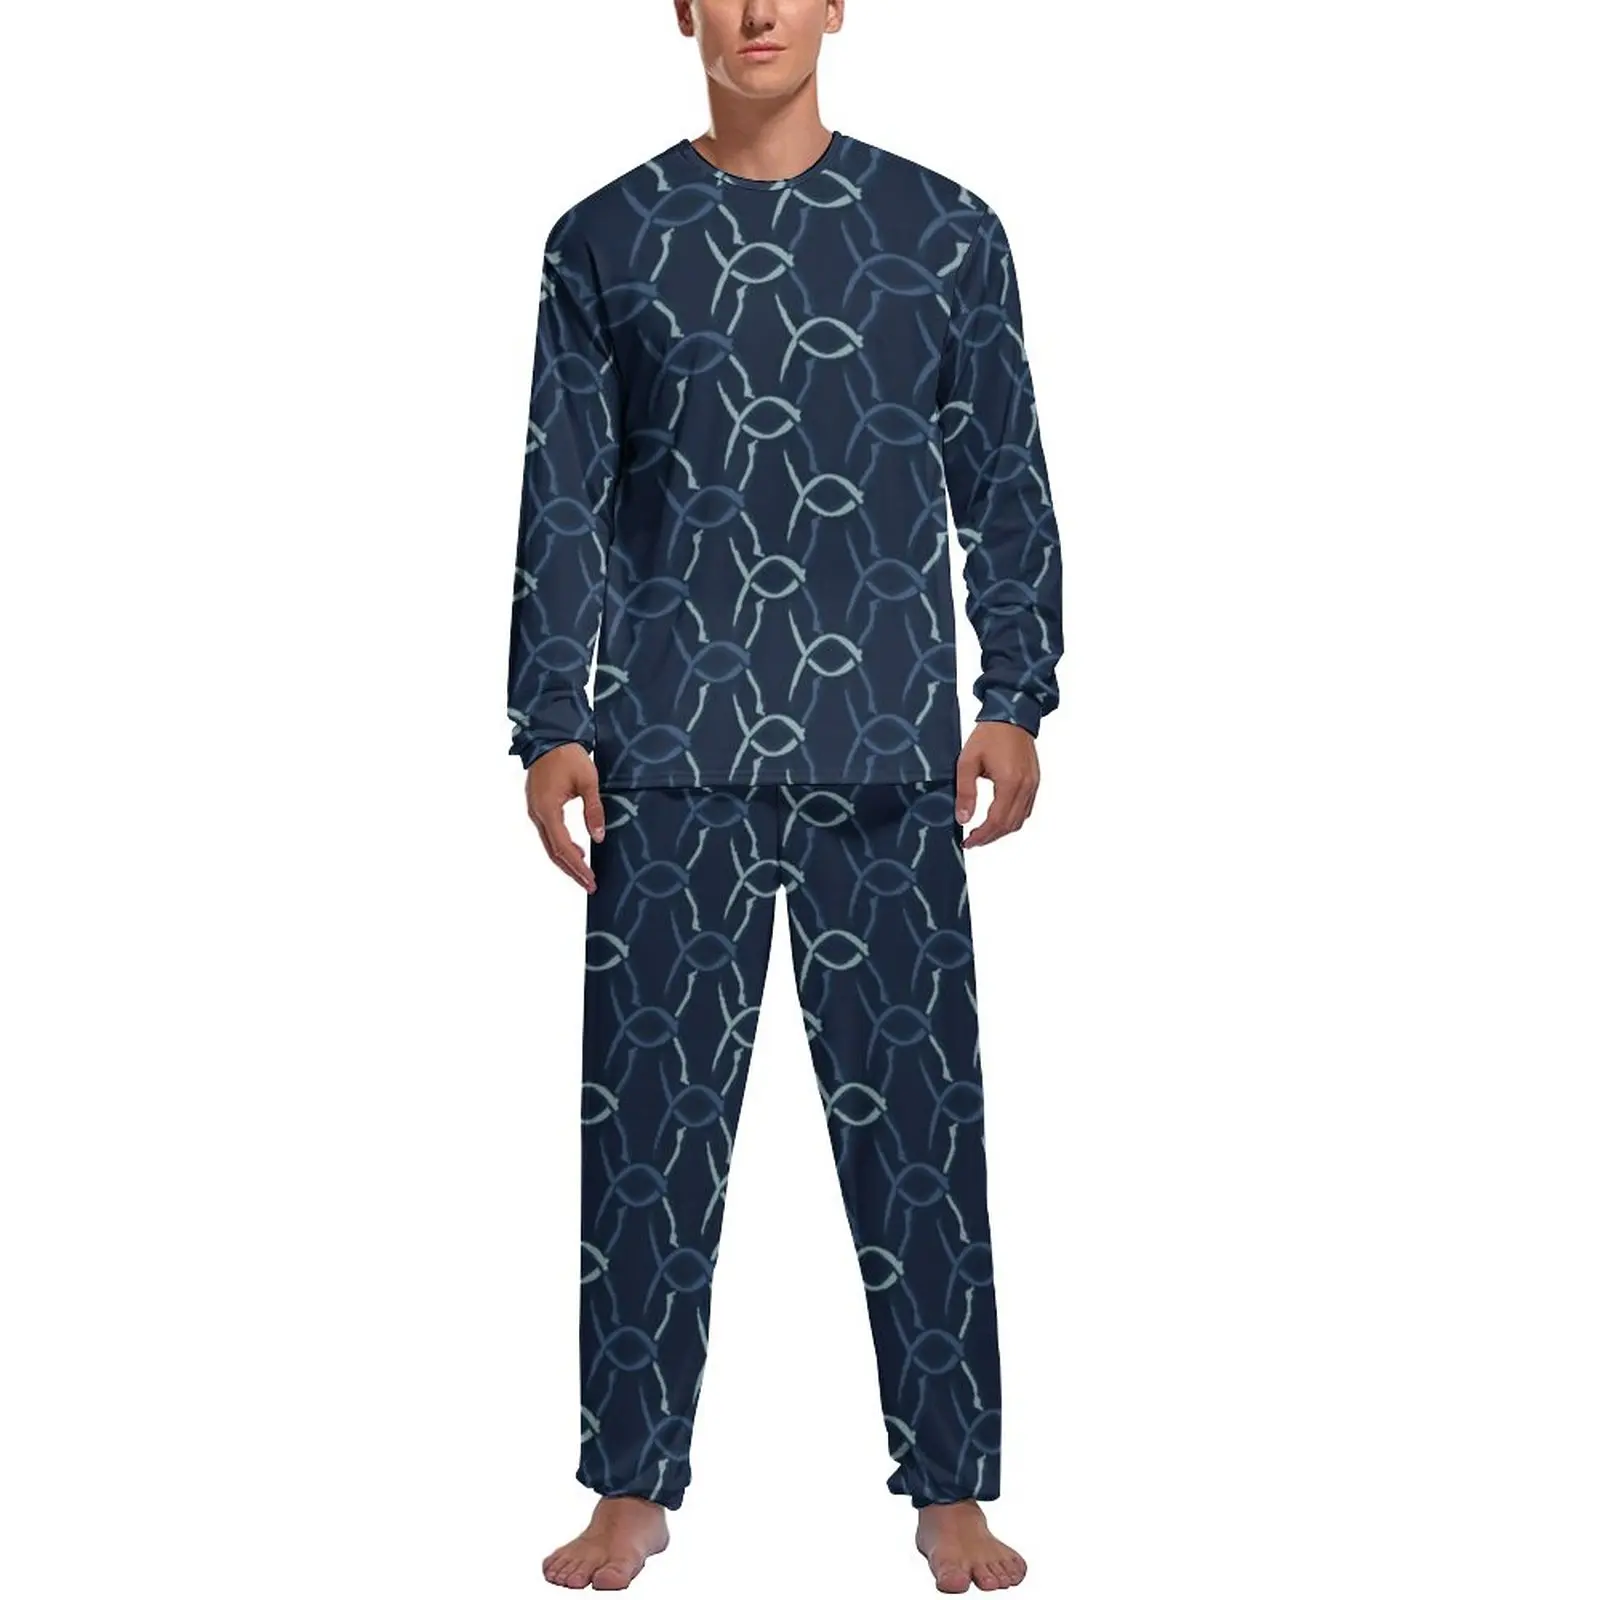 Chain Print Pajamas Autumn Indigo Blue Net Bedroom Sleepwear Men 2 Pieces Graphic Long Sleeves Cool Pajamas Set